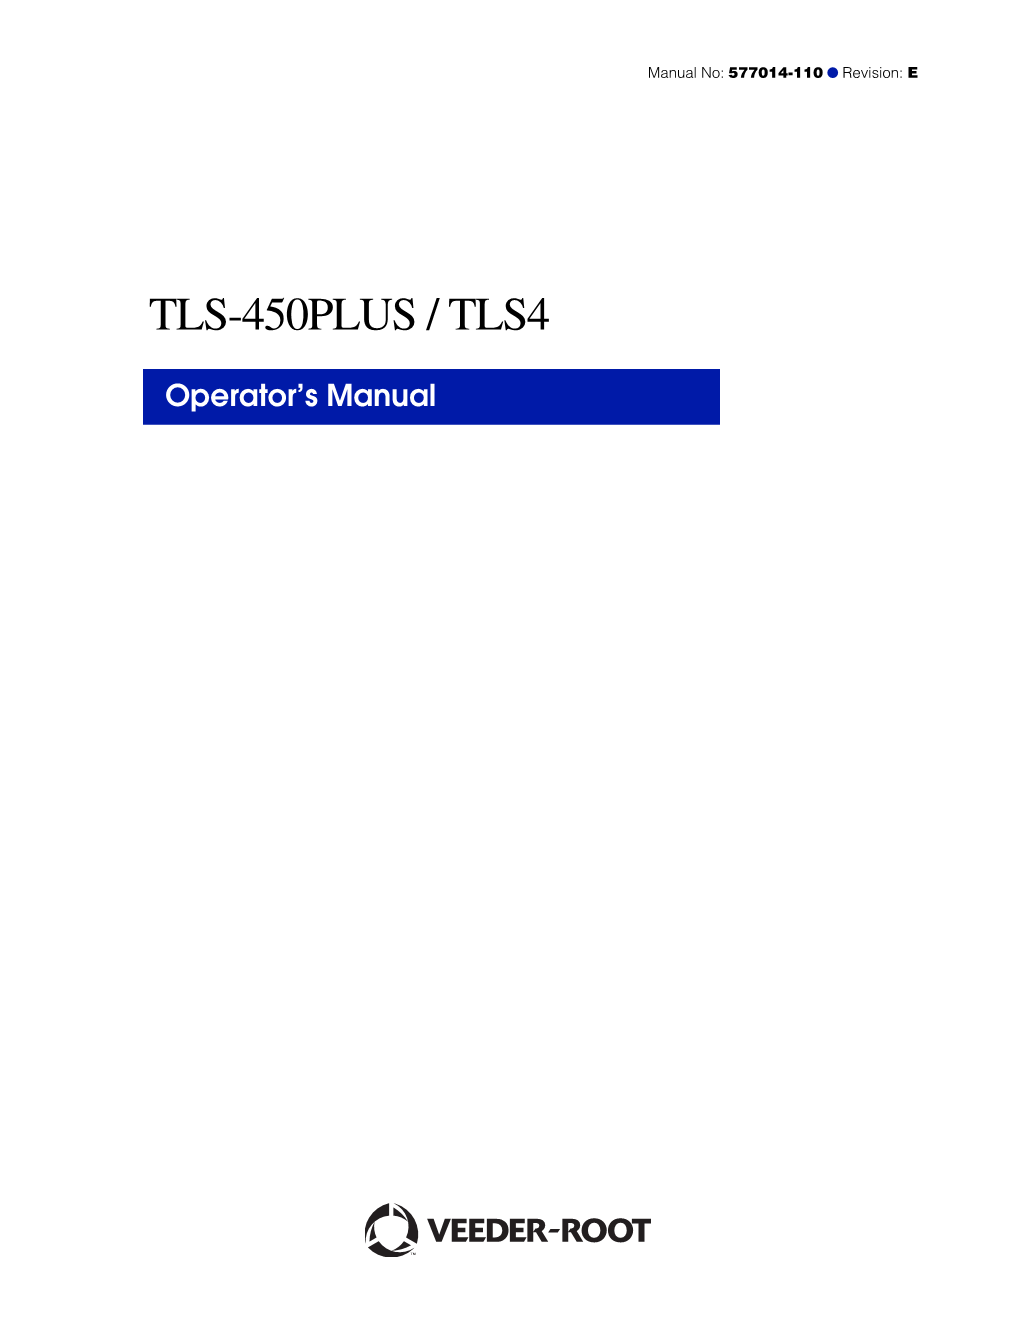 TLS-450PLUS/TLS4 Operator's Manual